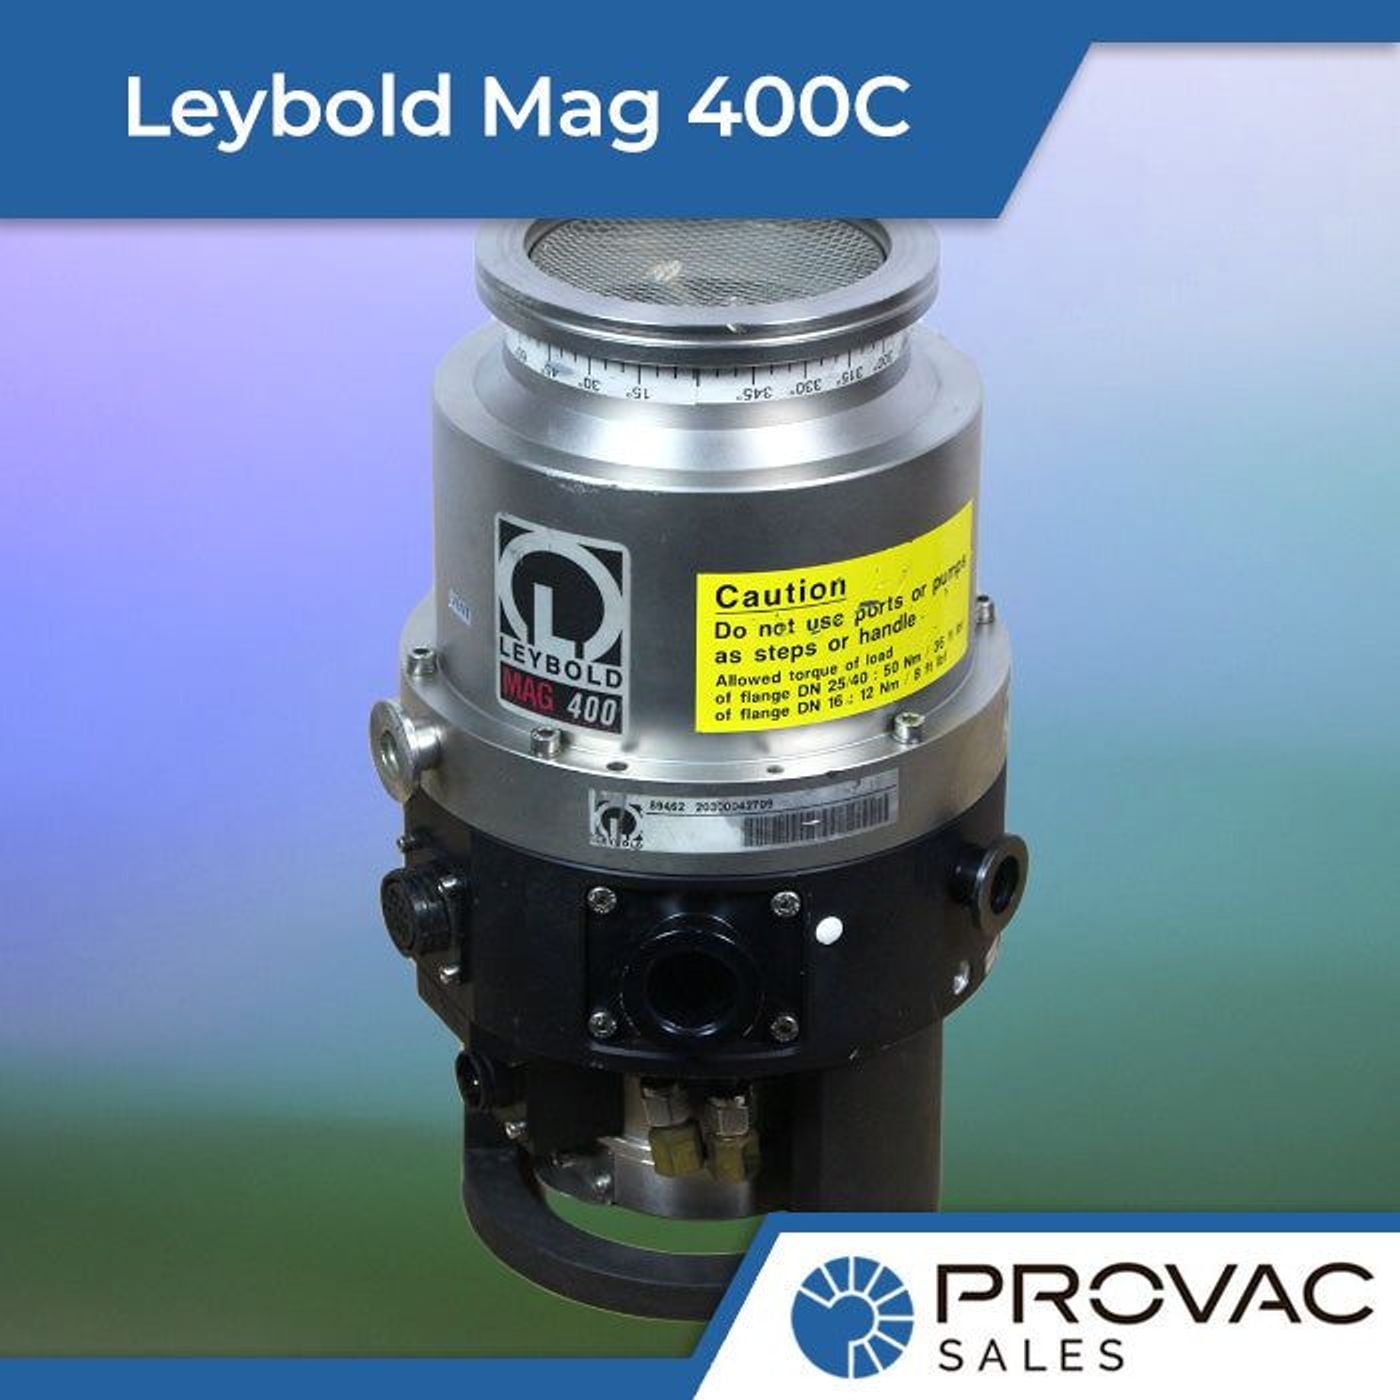 Leybold Mag 400C Turbomolecular Pump